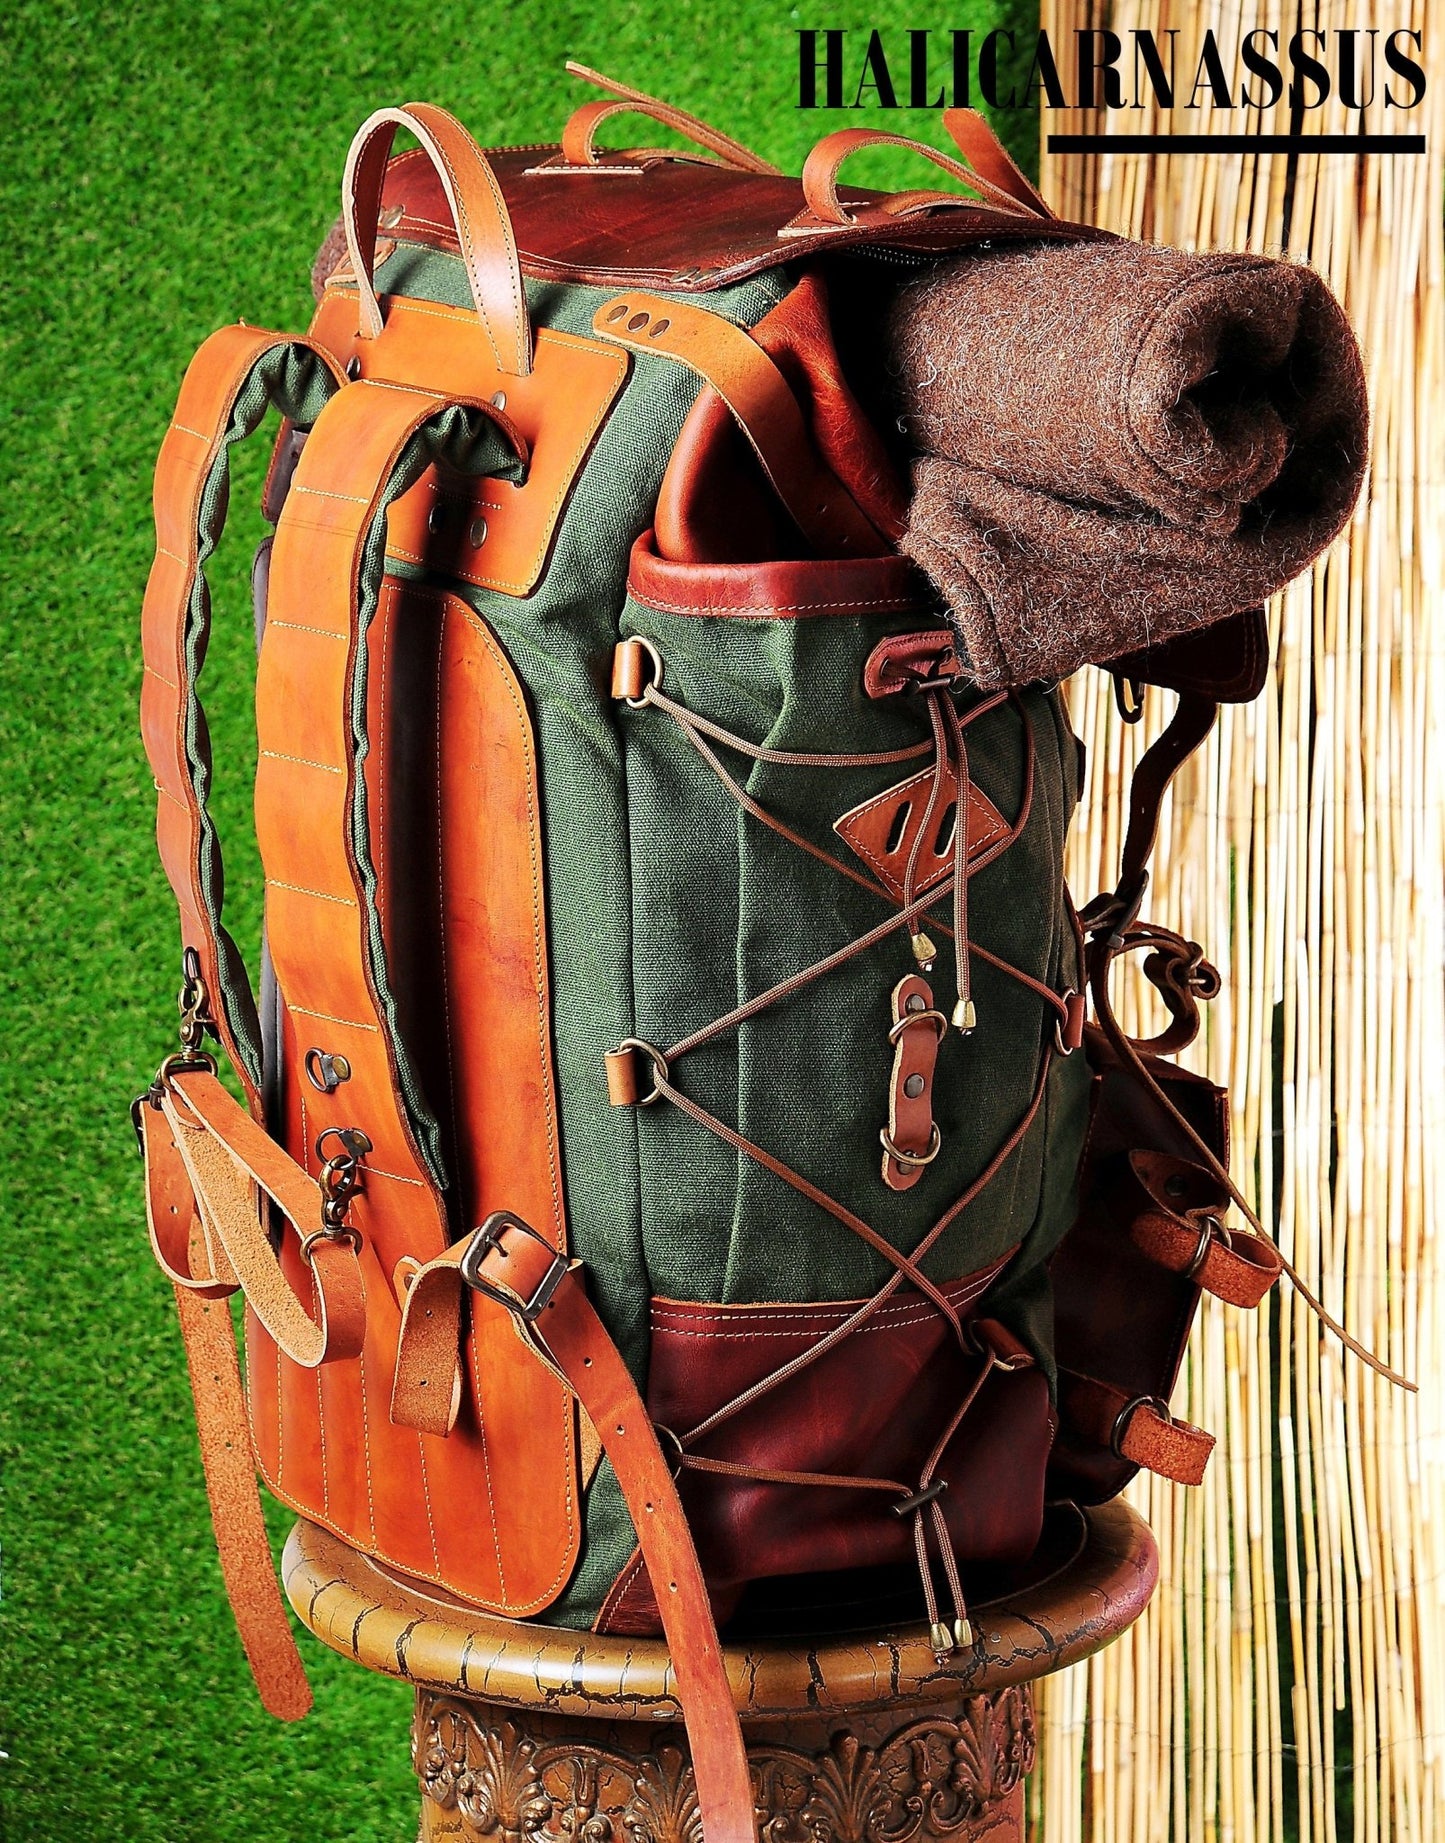 Leather Backpack | Handmade Backpack | Rucksack Backpack | Hiking Backpack | Sport Backpack | Leather-Canvas Backpack | Camping |  99percenthandmade 30 Halicarnassus 